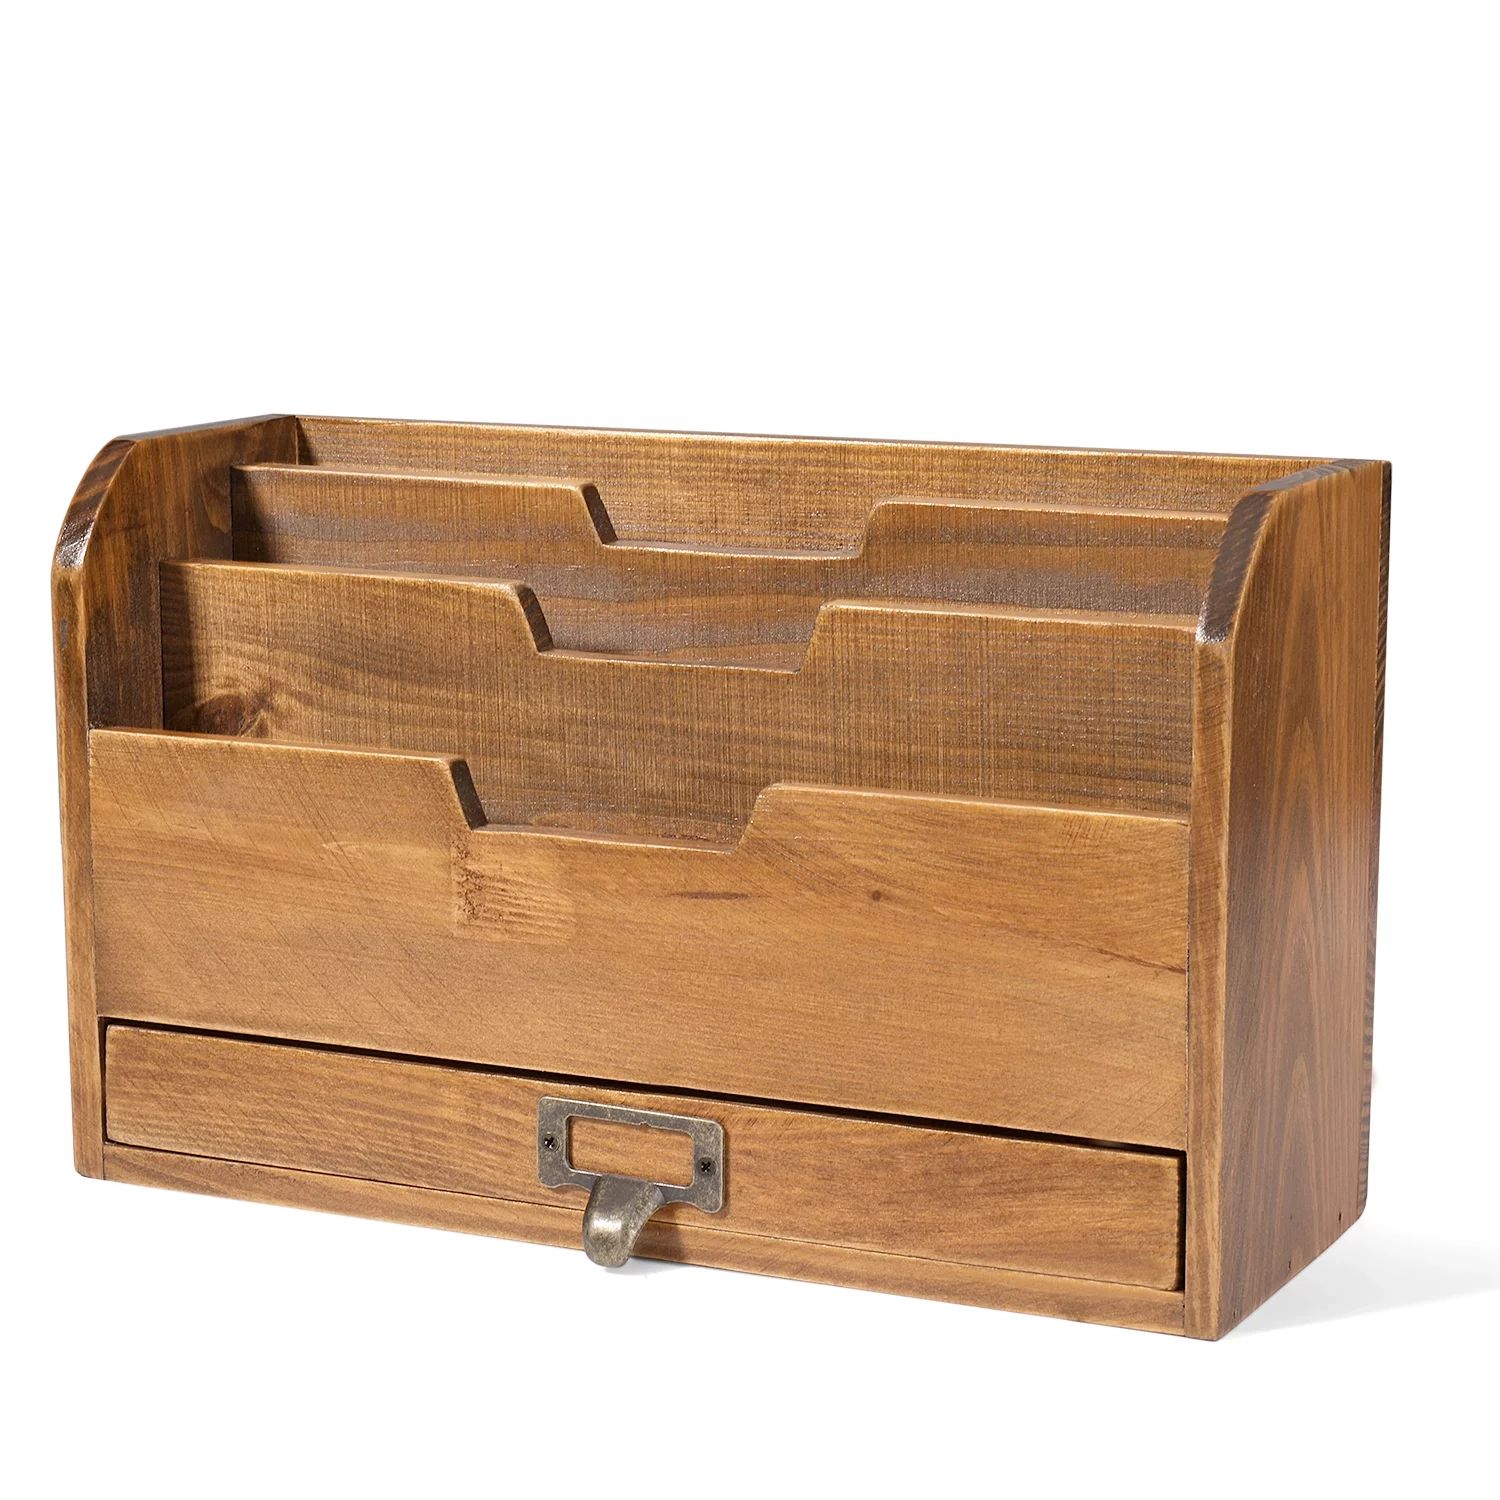 3 Tier Wooden Desk Organizer - Country Rustic Compartments Slot File Tray Pencil Sorter Shelf Hol... | Walmart (US)